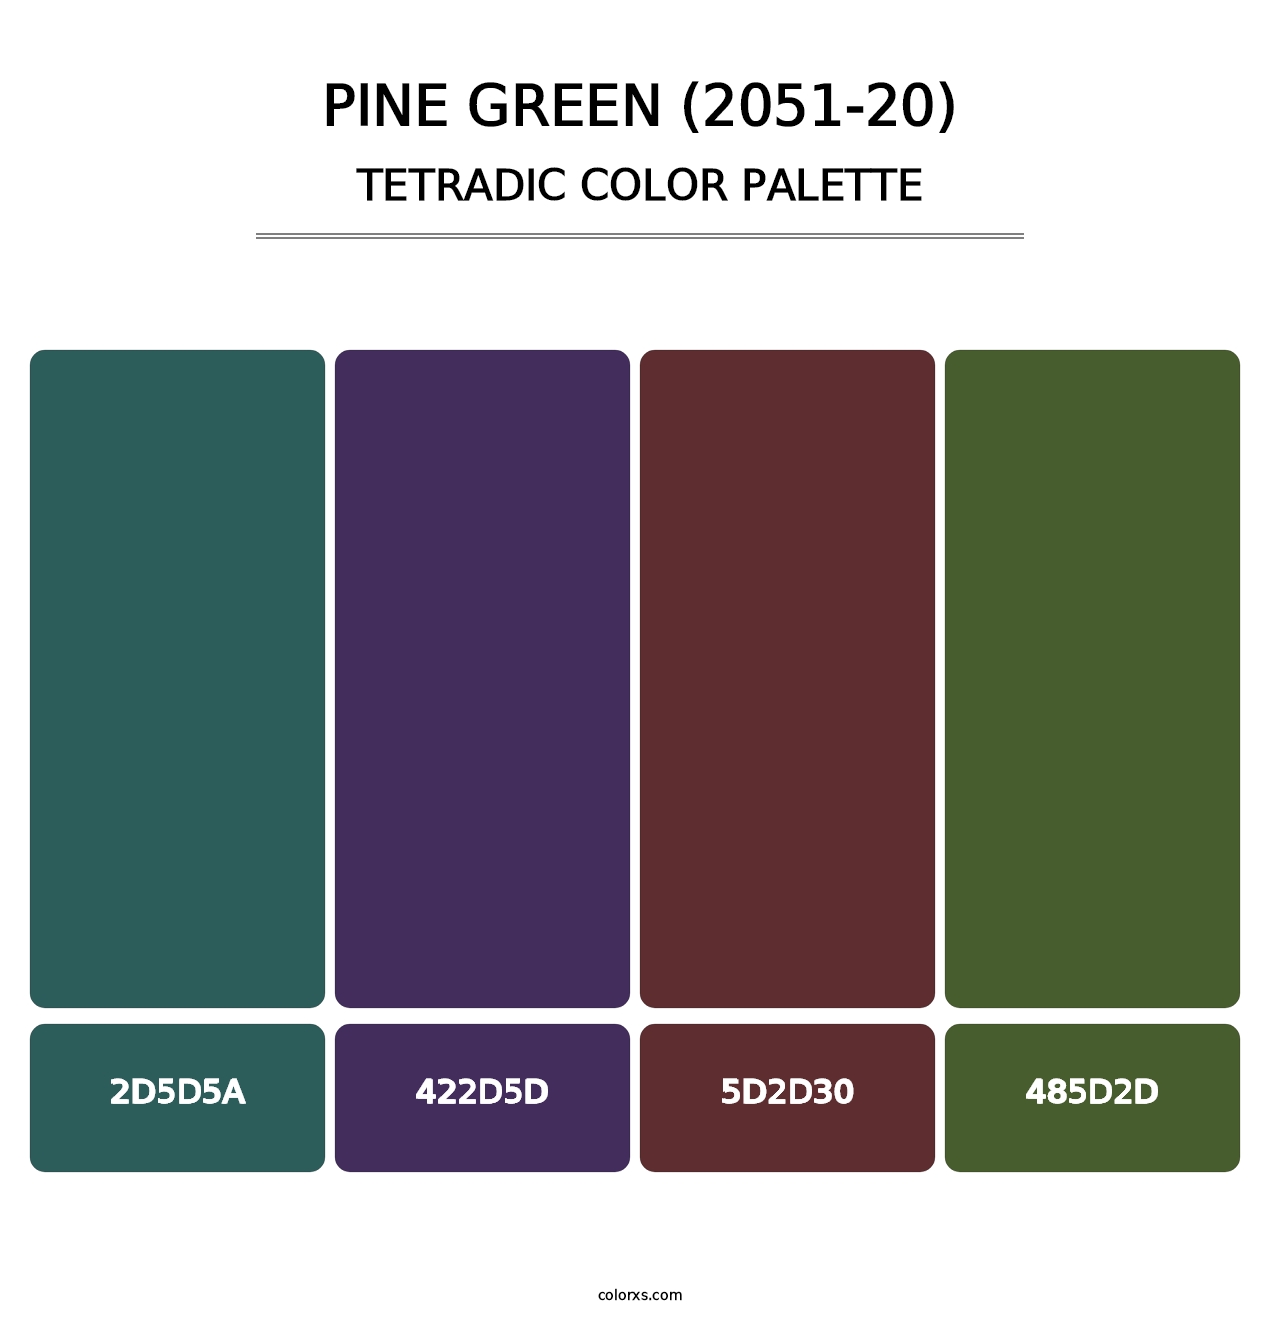 Pine Green (2051-20) - Tetradic Color Palette